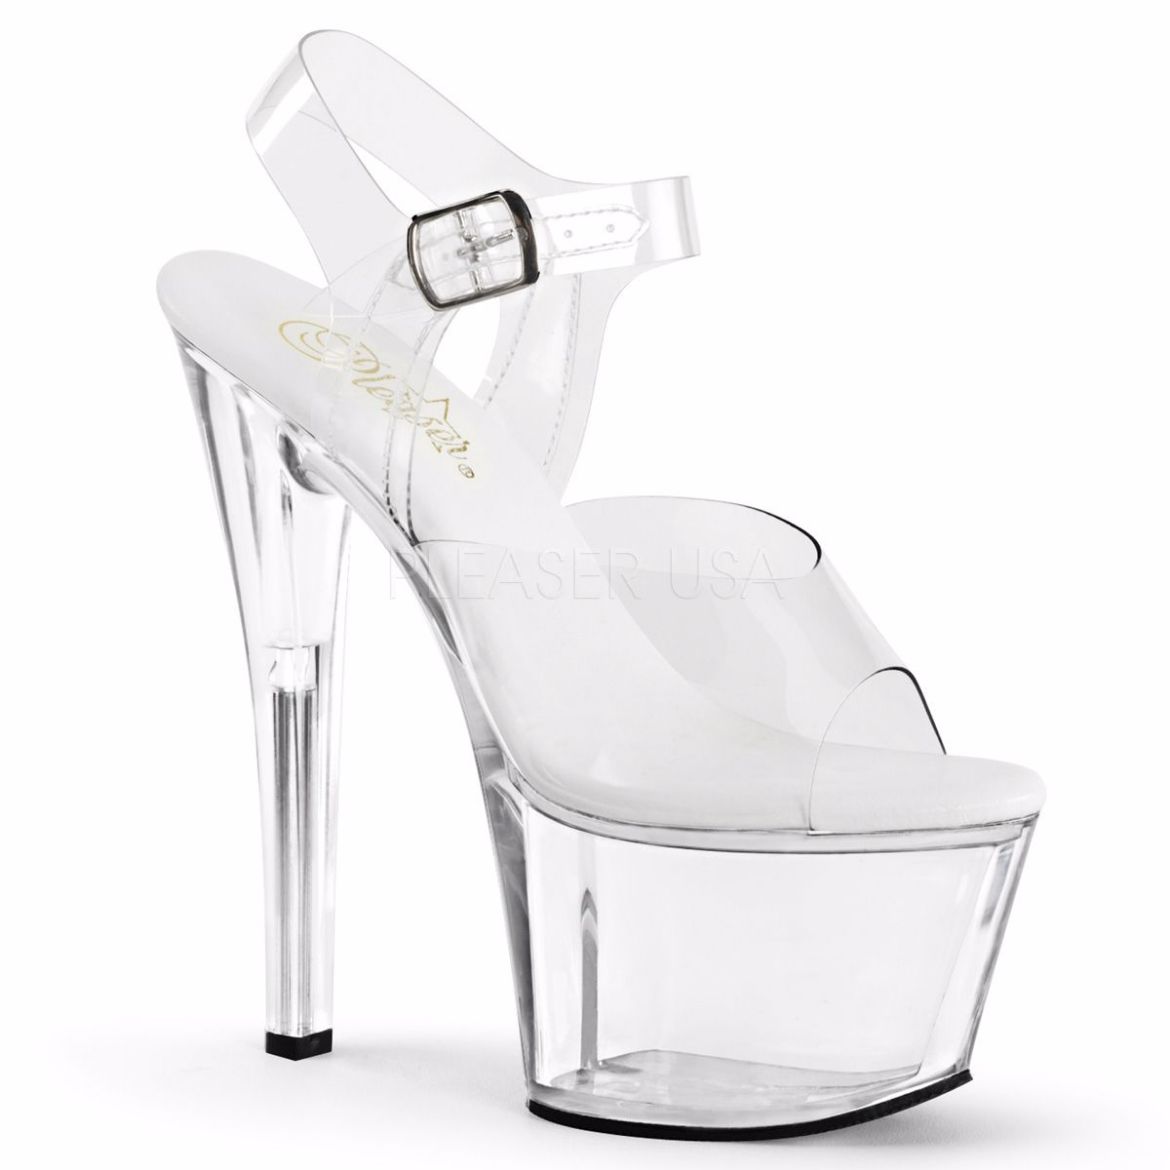 Product image of Pleaser Sky-308Vl Clear/Clear, 7 inch (17.8 cm) Heel, 2 3/4 inch (7 cm) Platform Sandal Shoes